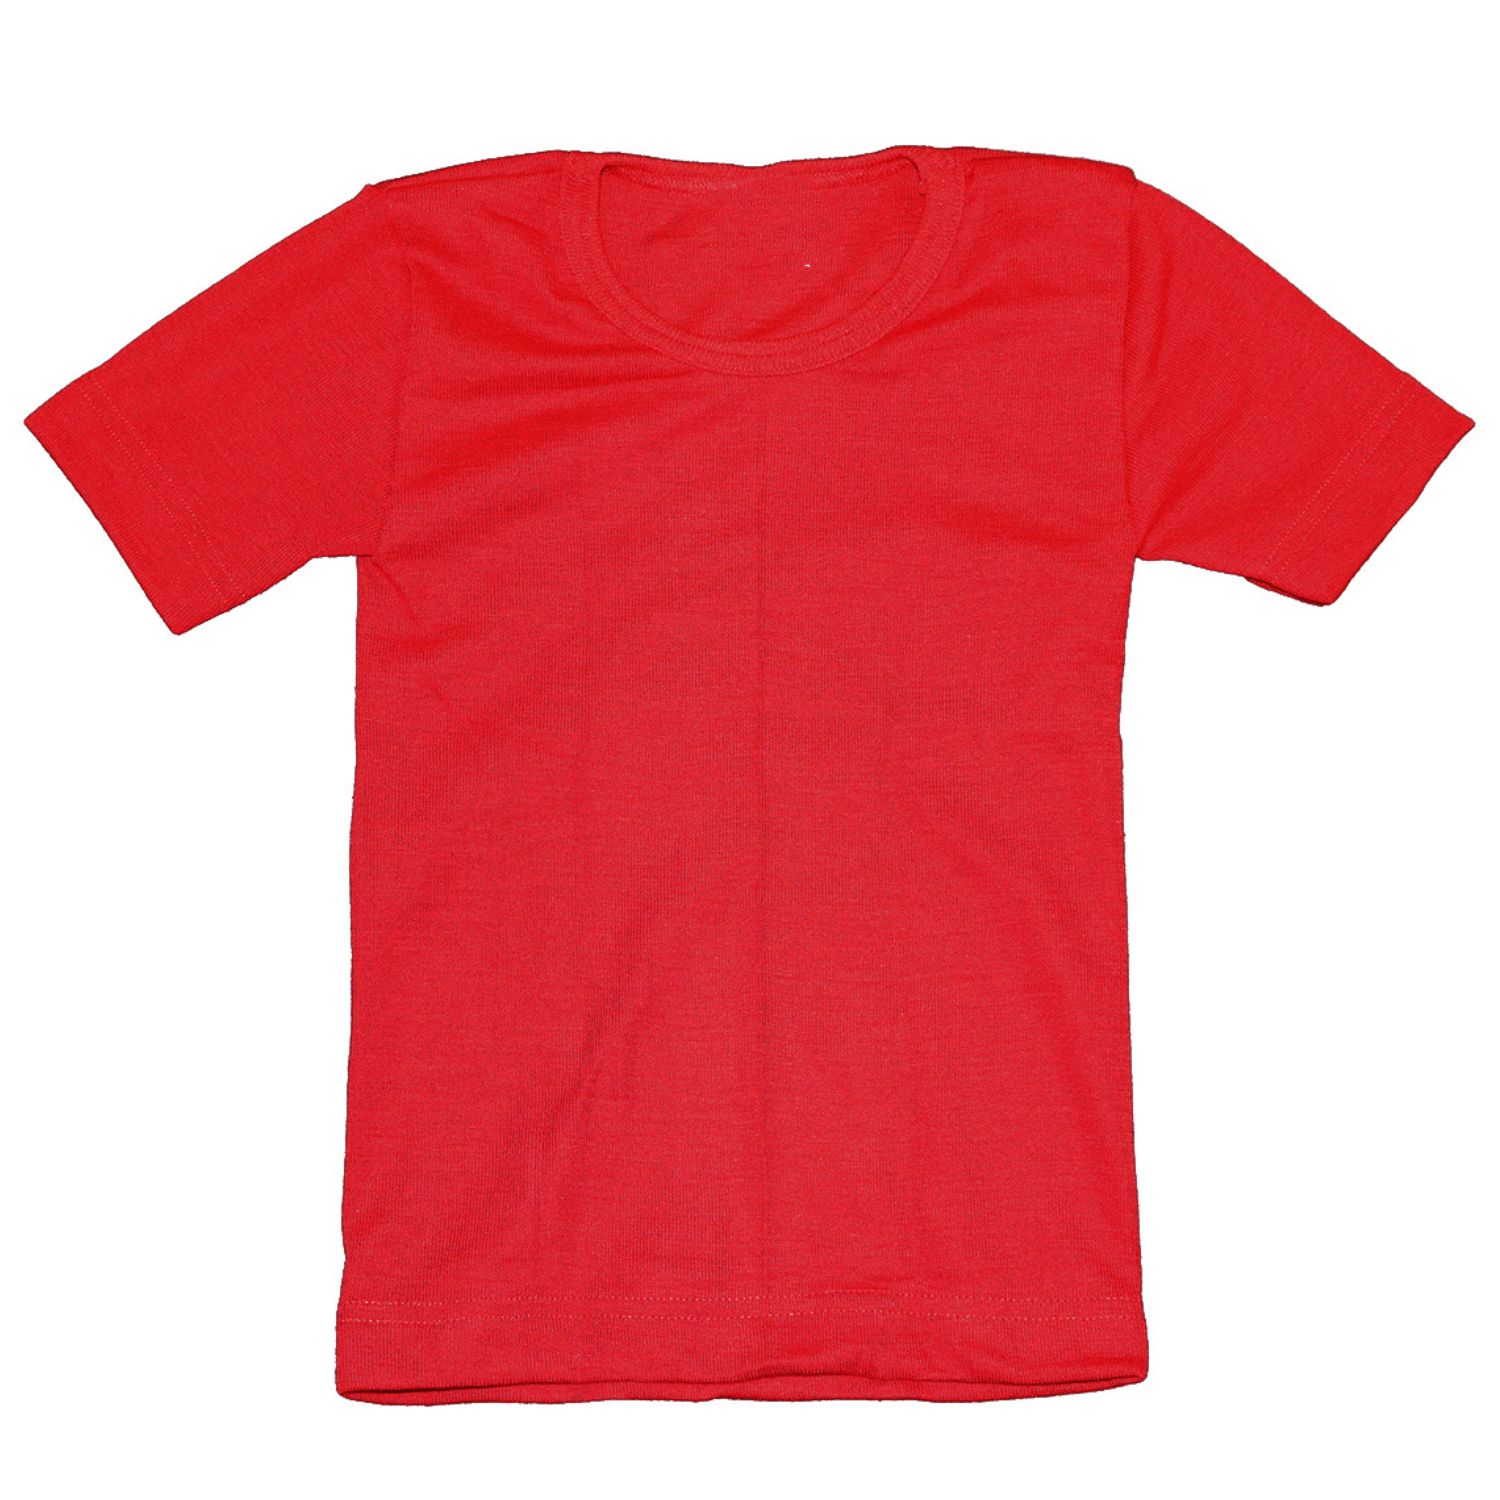 Cosilana Kinder-Unterhemd (Kurzarm) aus Wolle/Seide